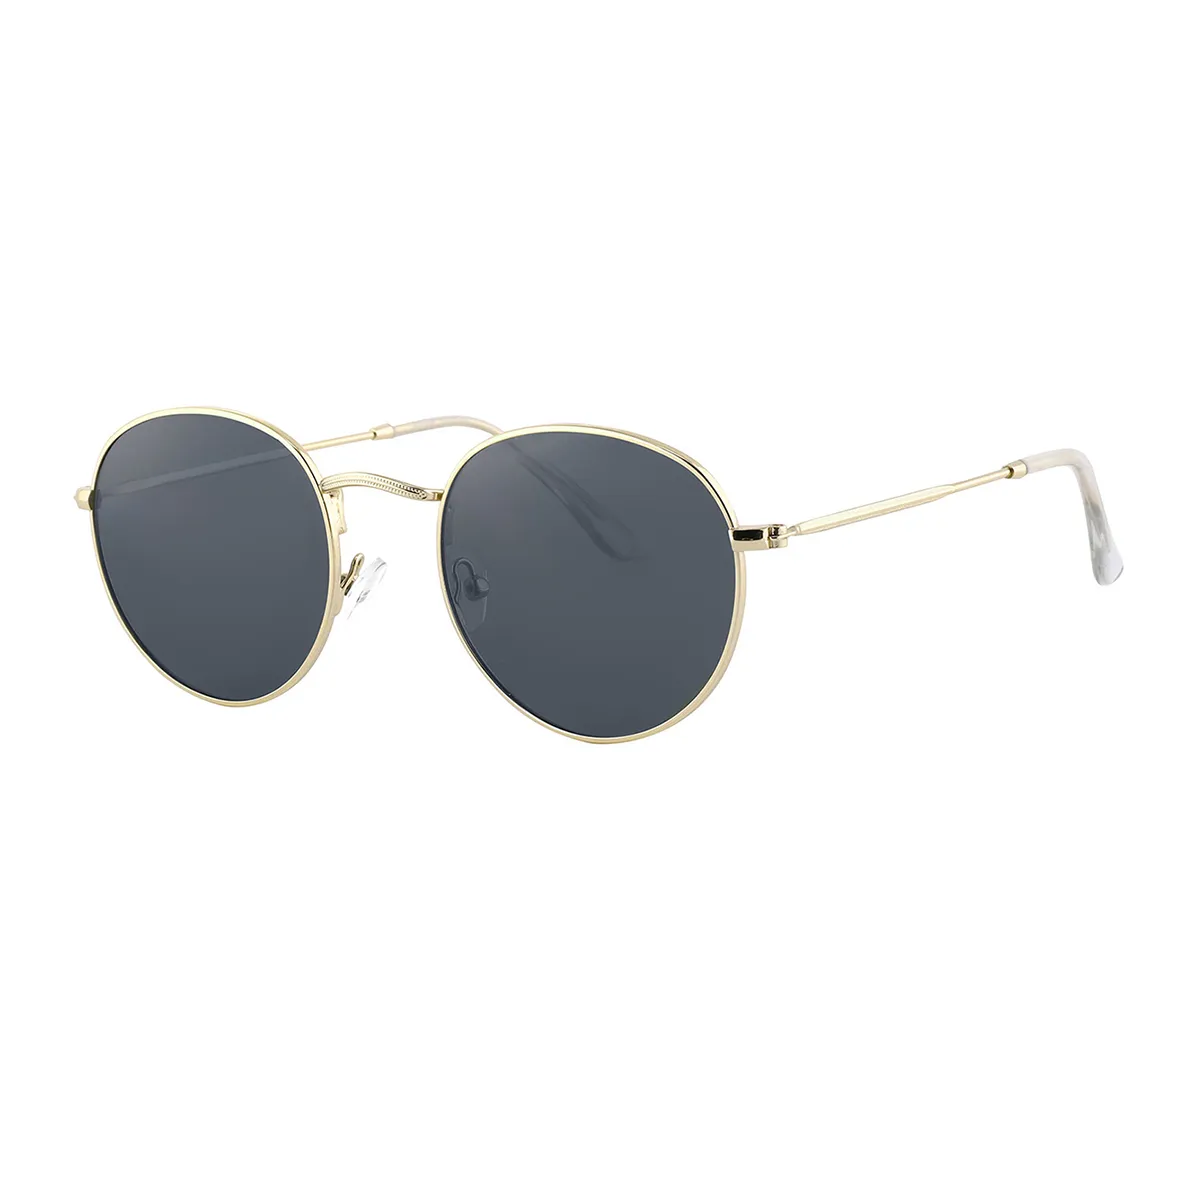 Classic Round Gold/1 Sunglasses for Women & Men